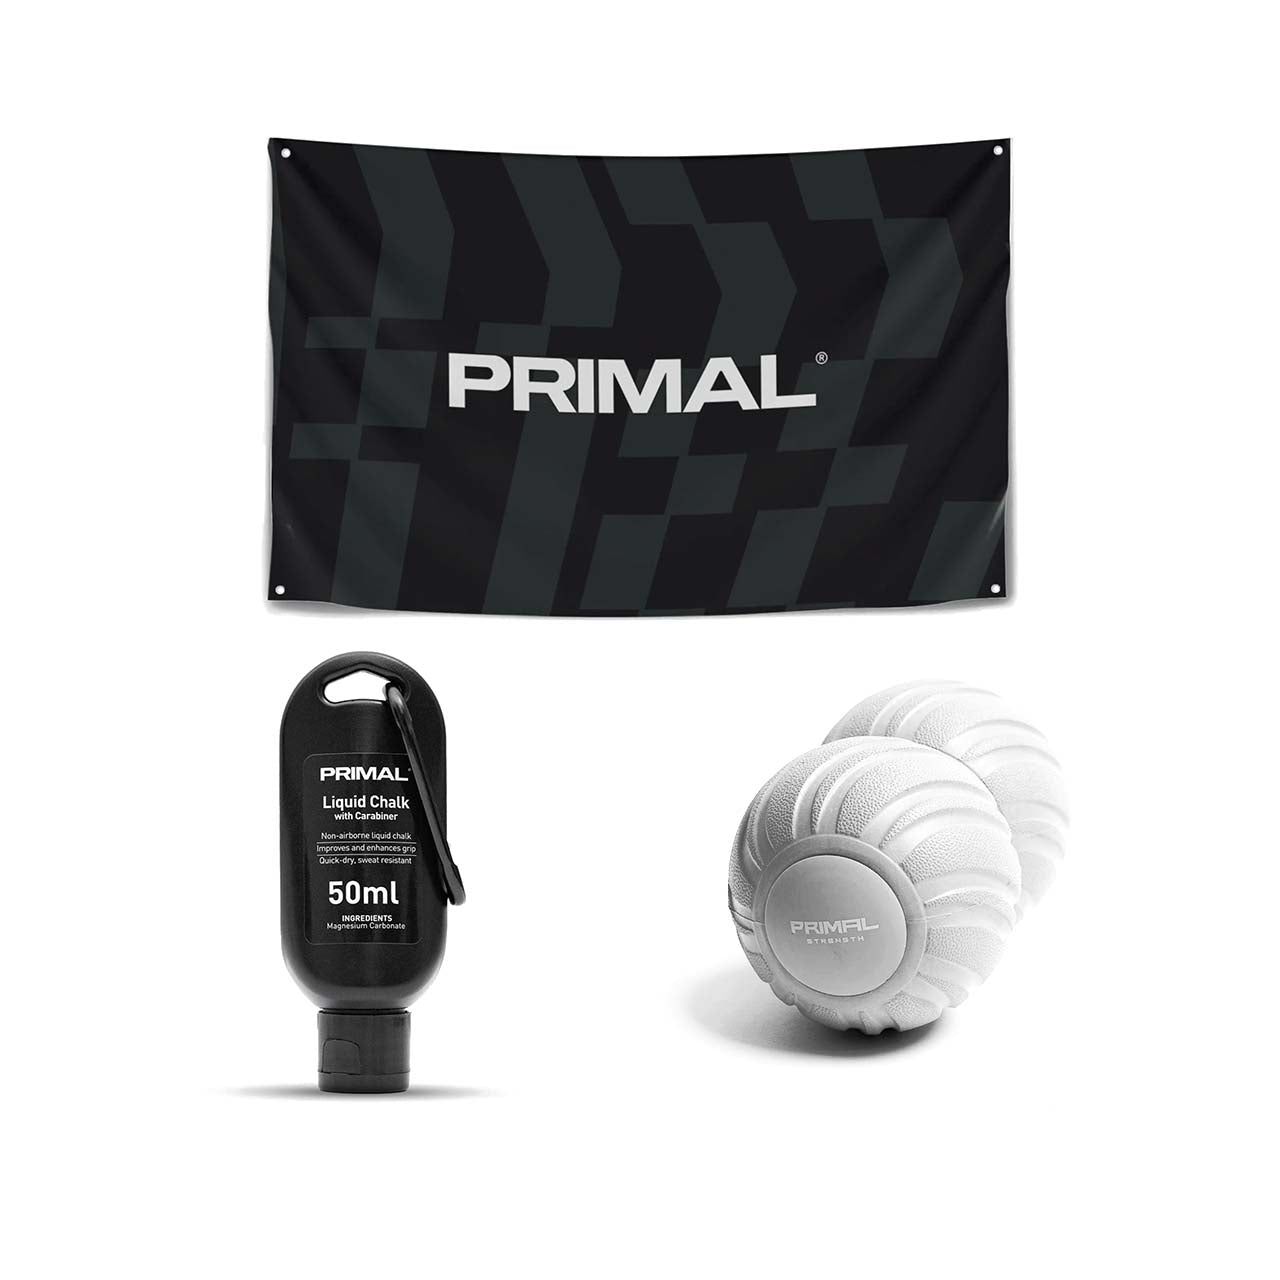 Primal Chalk, Flag & Recovery Massage Ball Bundle